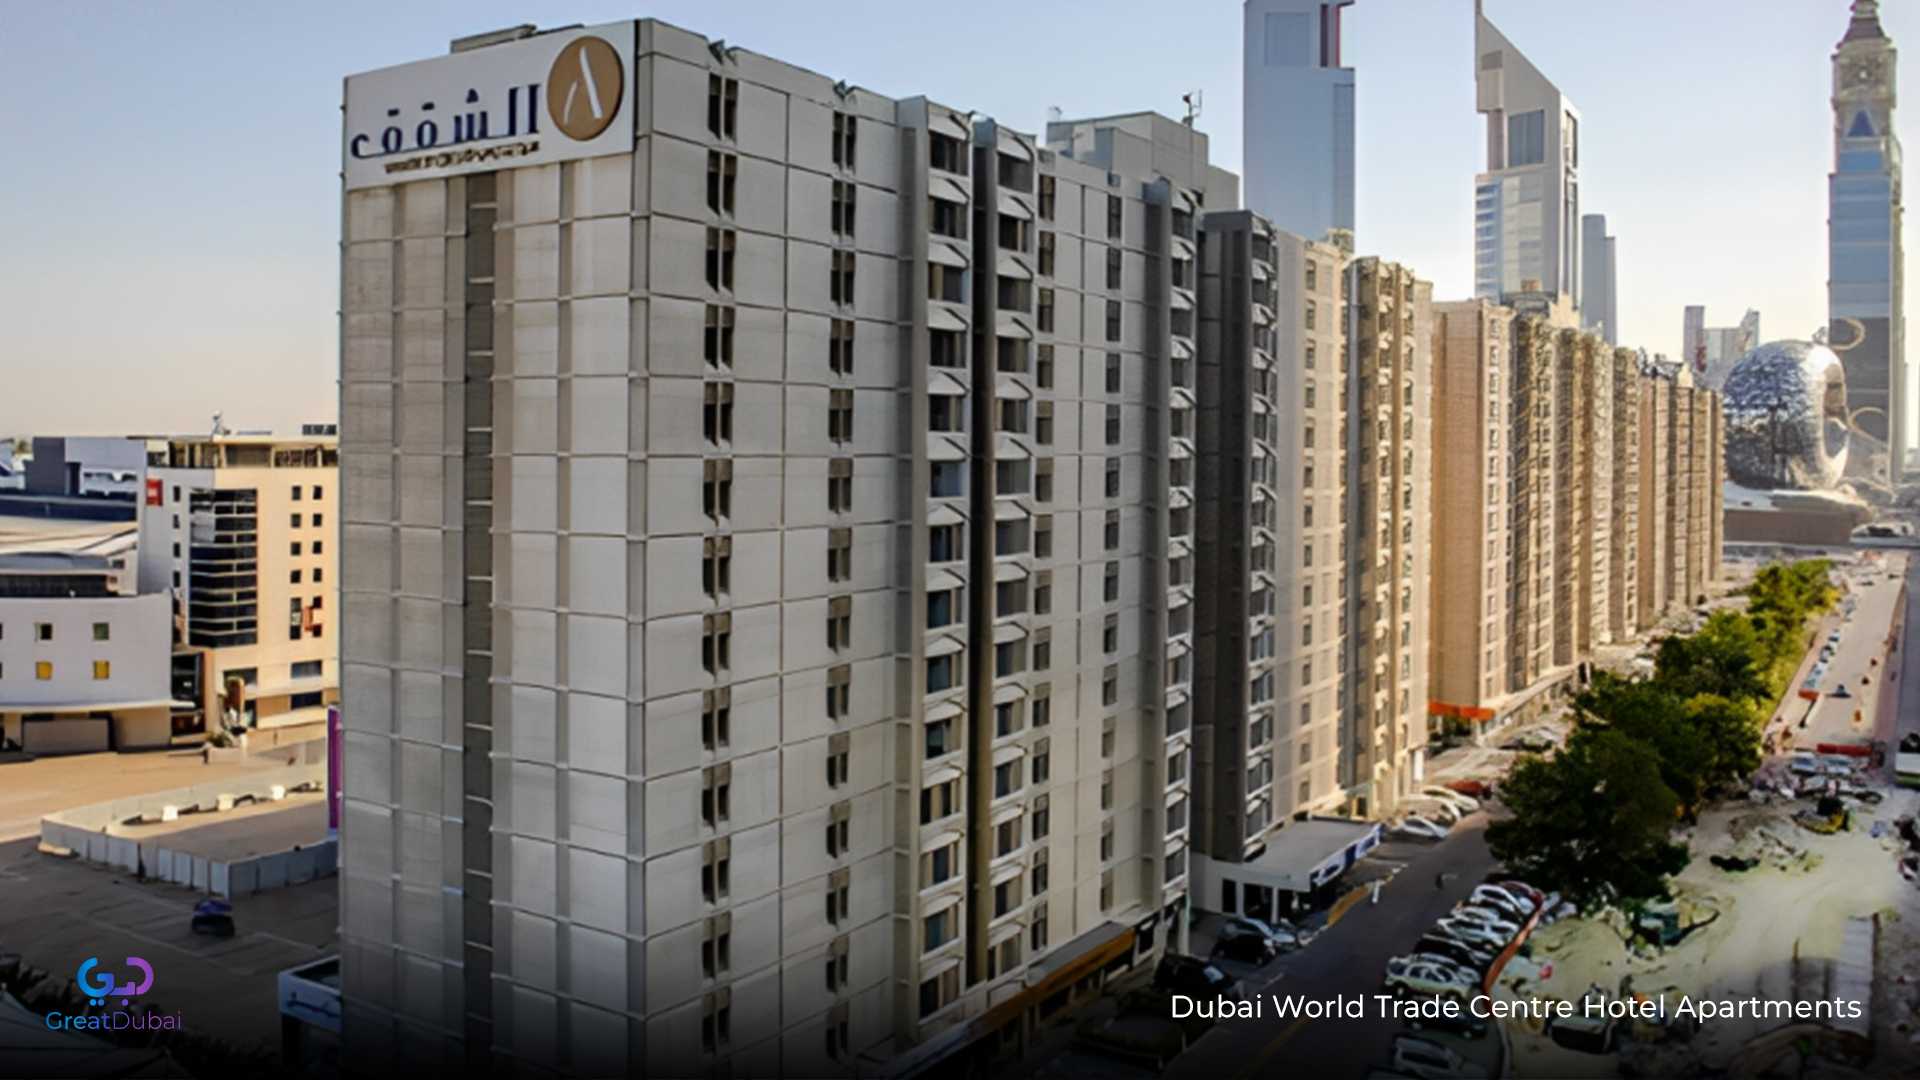 Dubai World Trade Centre Hotel Apartments